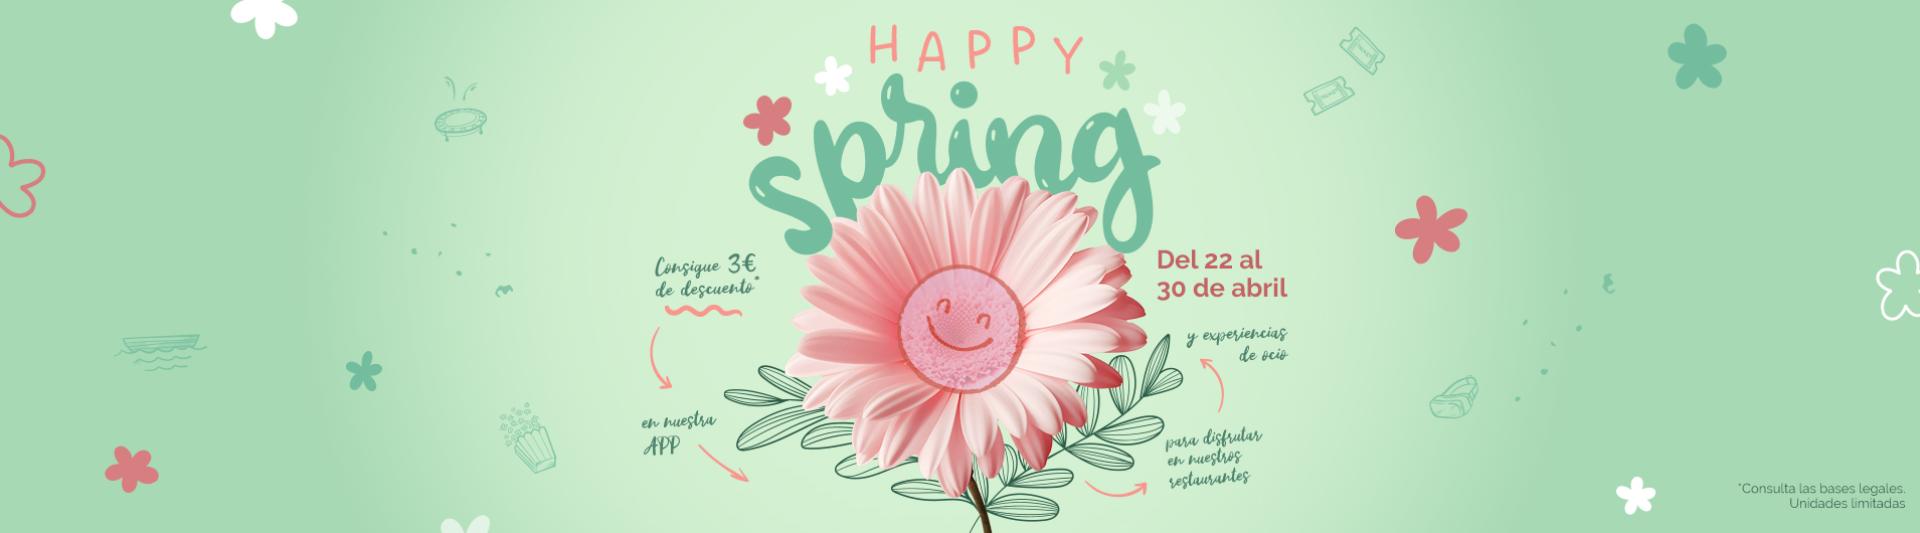 happy-spring-post.jpg